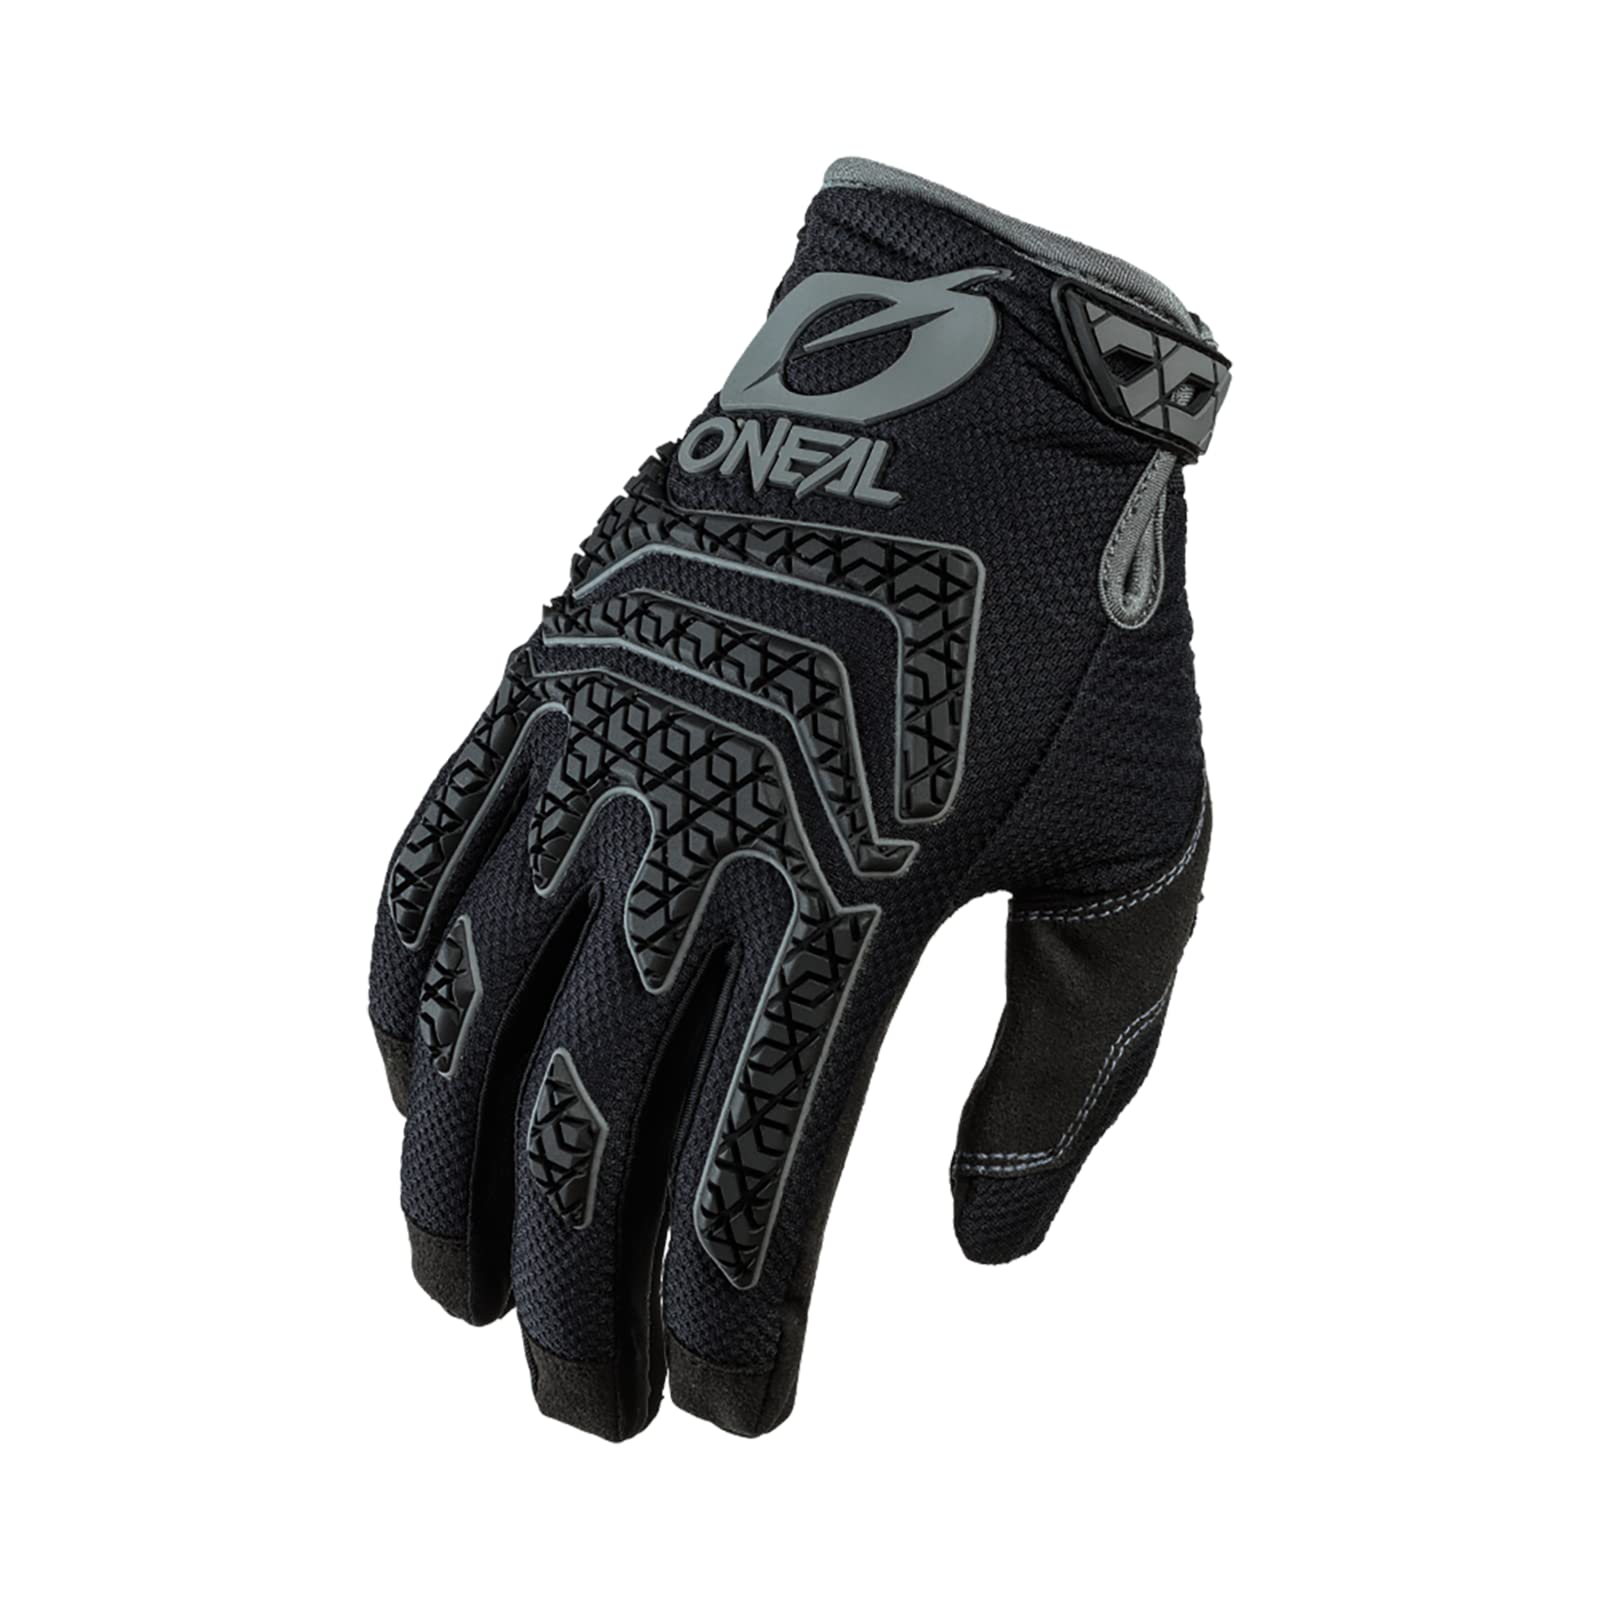 O'NEAL | Fahrrad- & Motocross-Handschuhe | MX MTB DH FR Downhill Freeride | Langlebige, Flexible Materialien, Silikonprint für Grip | Sniper Elite Glove | Erwachsene | Schwarz Grau | Größe S von O'NEAL